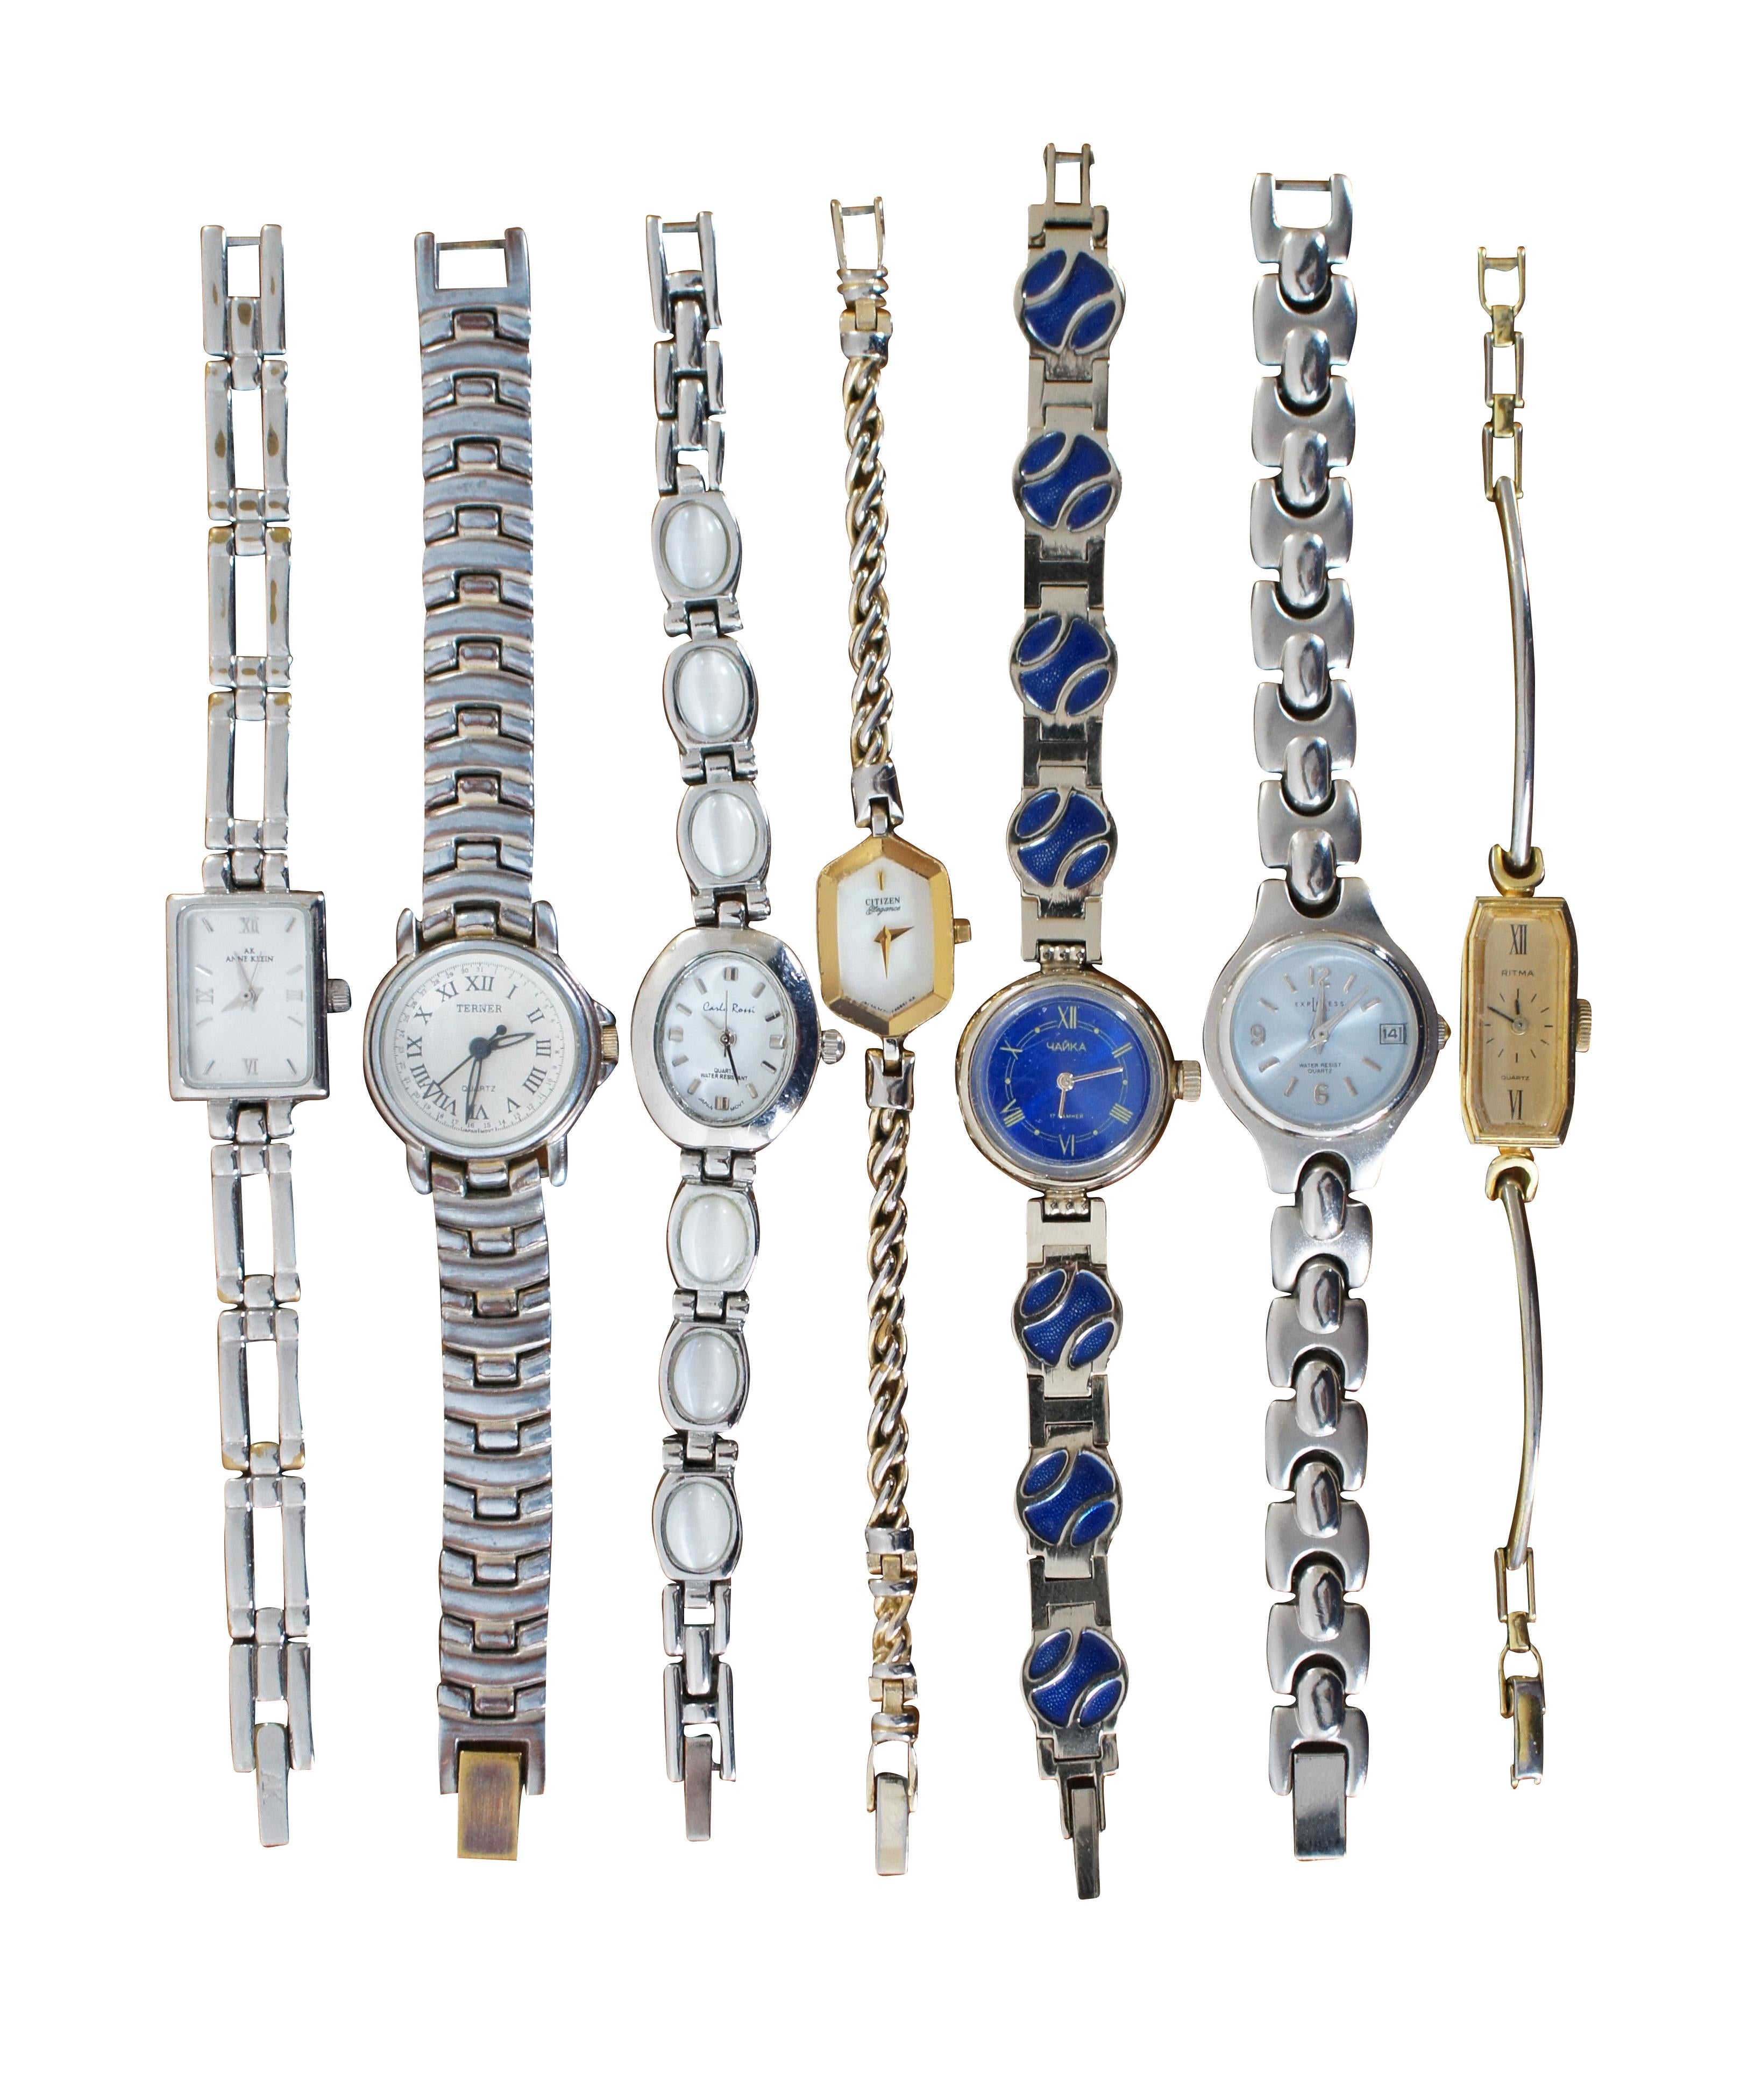 Lot of 11 vintage ladies watches, ten standard wrist watches and one clip on watch. Lot includes Bijou Terner, K-2853L; Anne Klein, 10/4737; Carlo Rossi; Citizen Watch Co. Elegance, 5421-F41841 YO, 1050865; ЧАЙКА (Cajka); LA Express, LAX1336, 012,